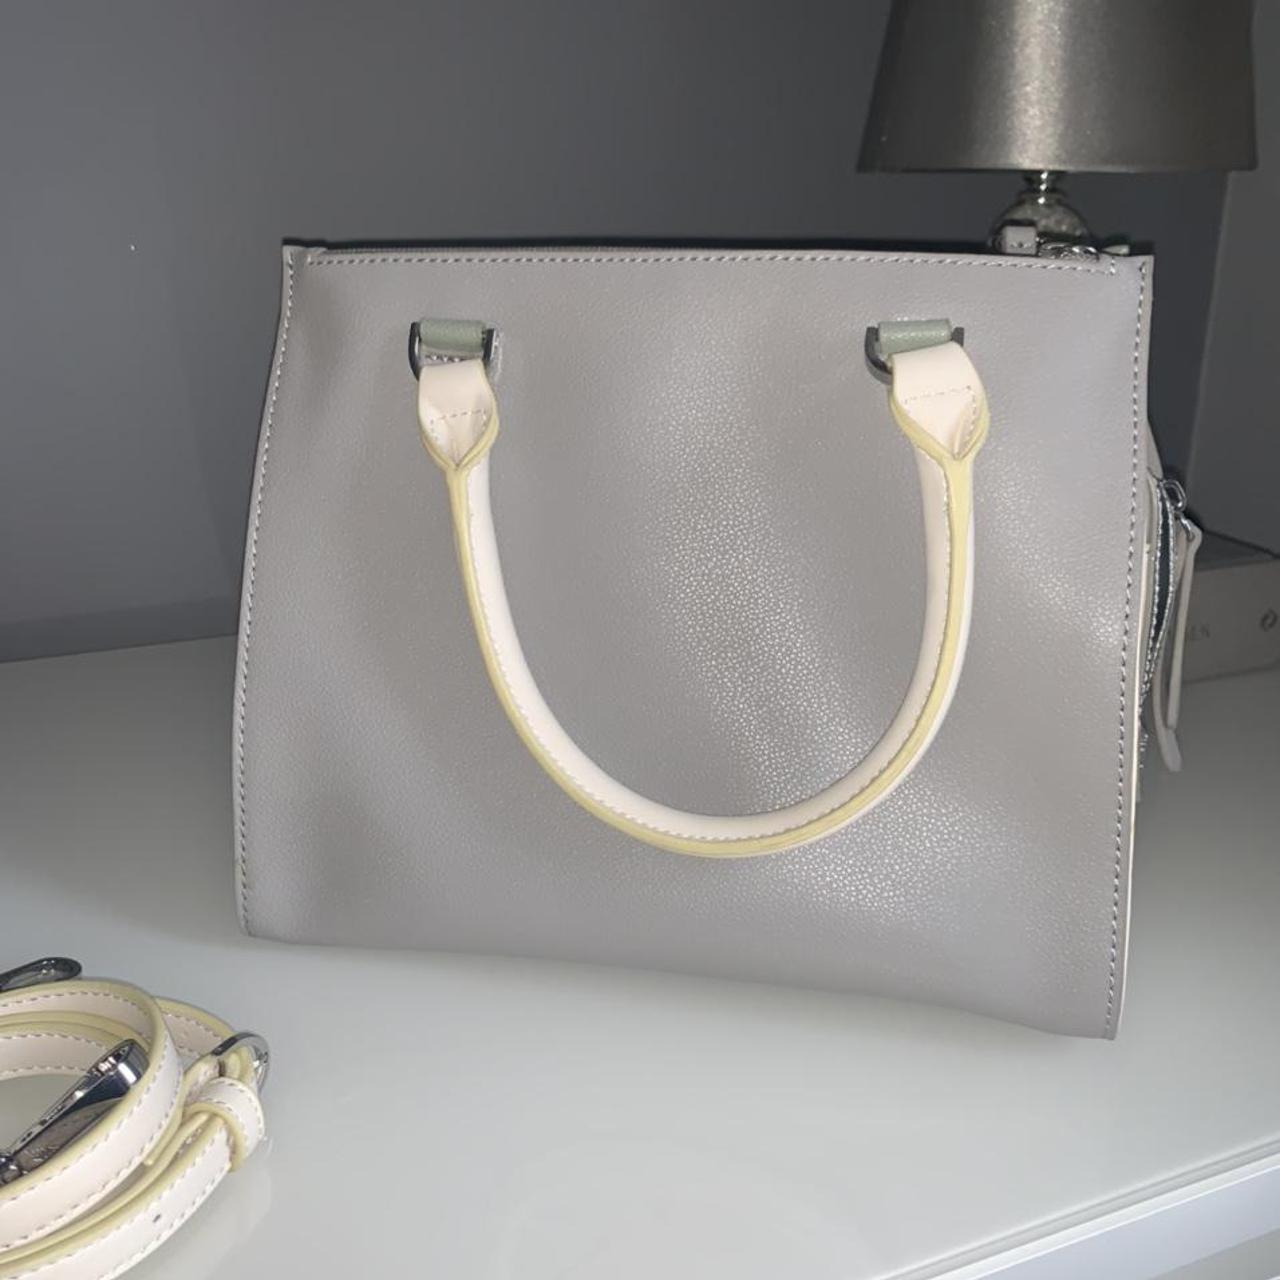 Product Image 2 - Fiorelli handbag.

Good condition, one small